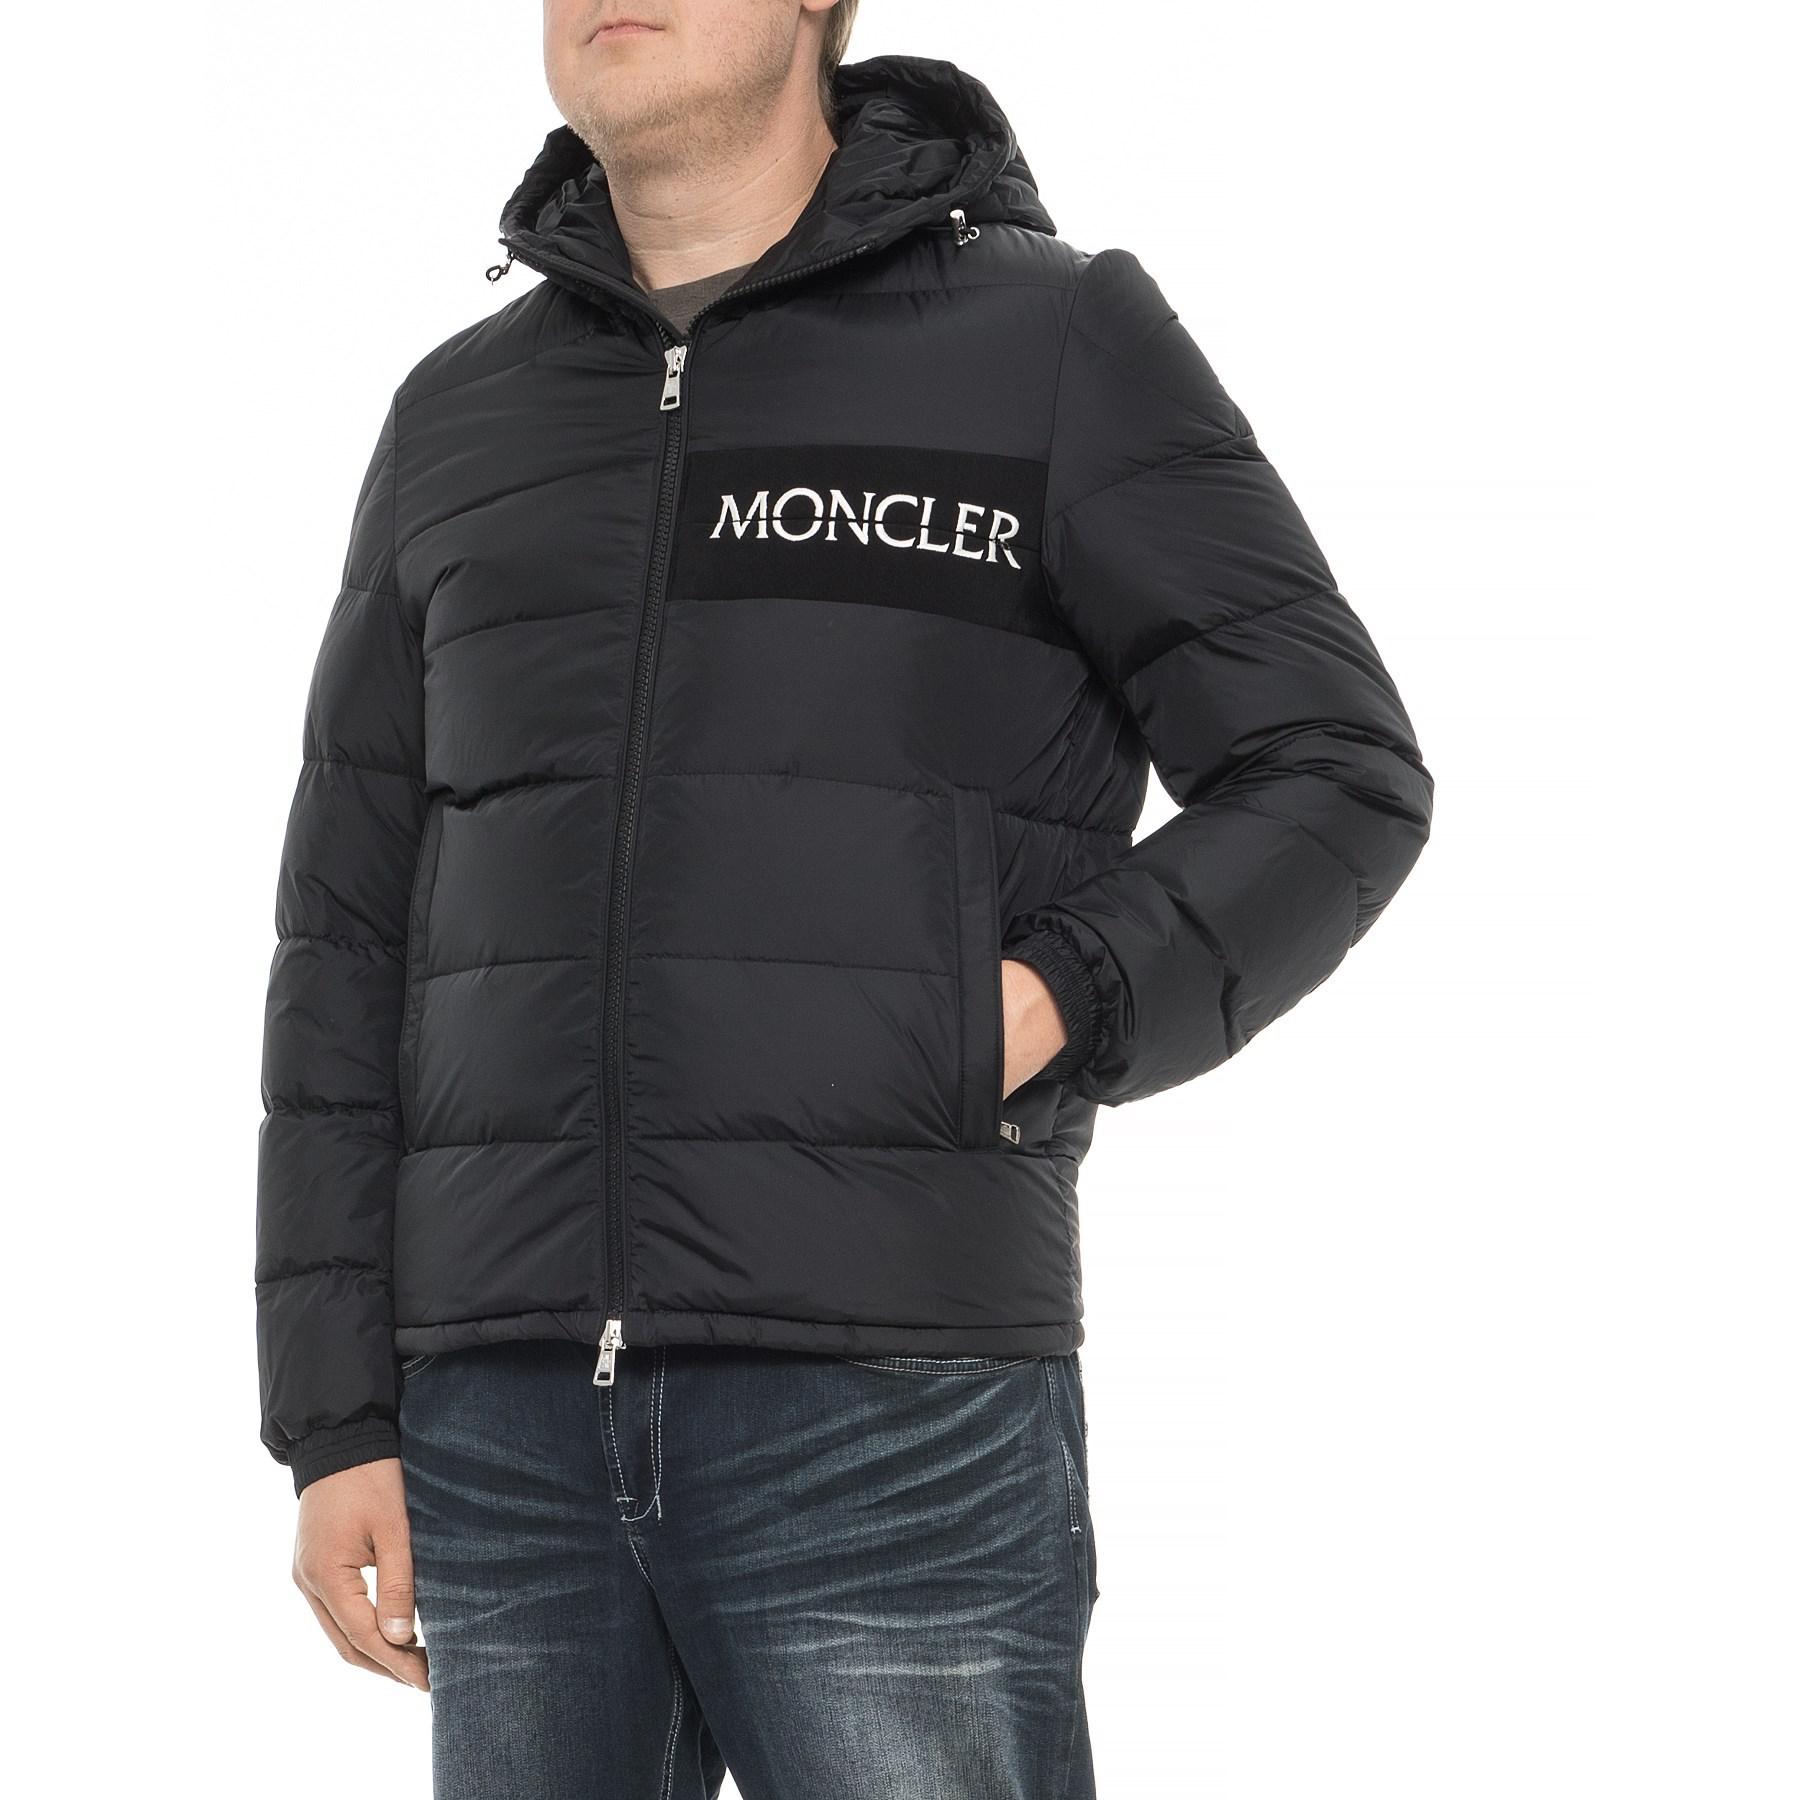 moncler aiton down jacket,OFF 66%www.jtecrc.com